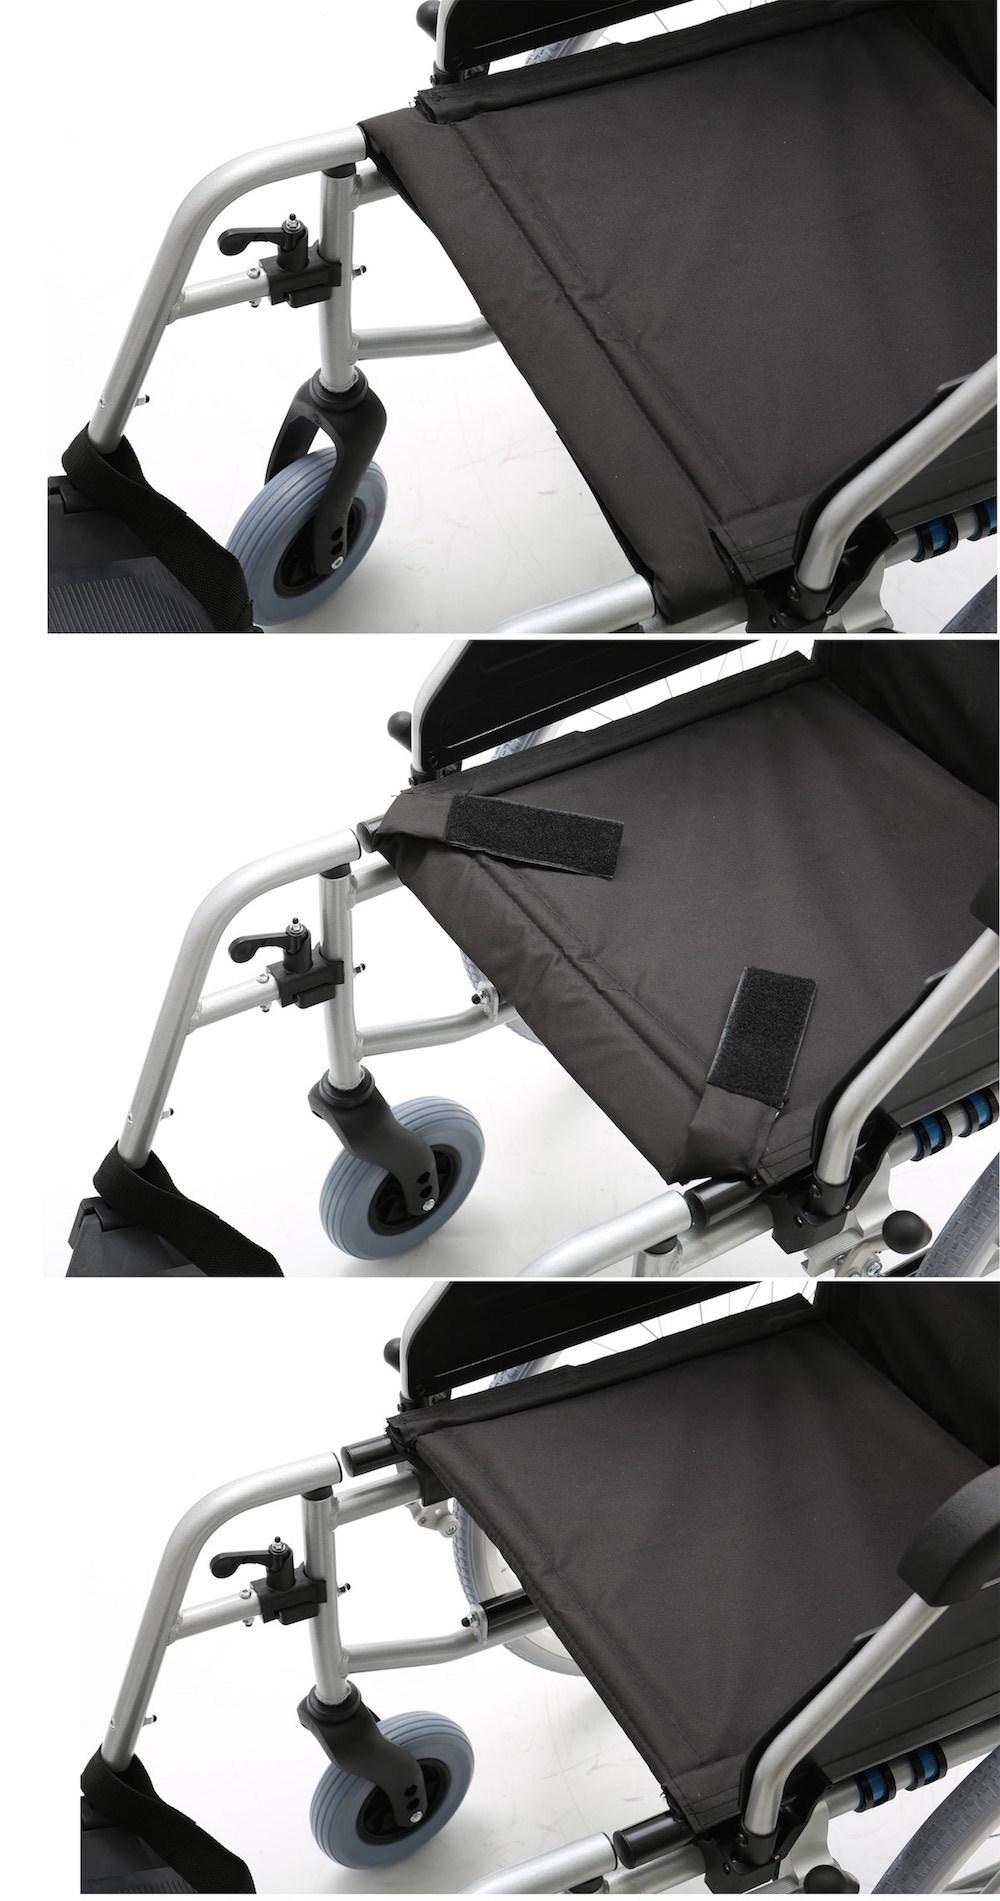 Alloy, Height Adjustable, Wheelchair, (AL-001J)